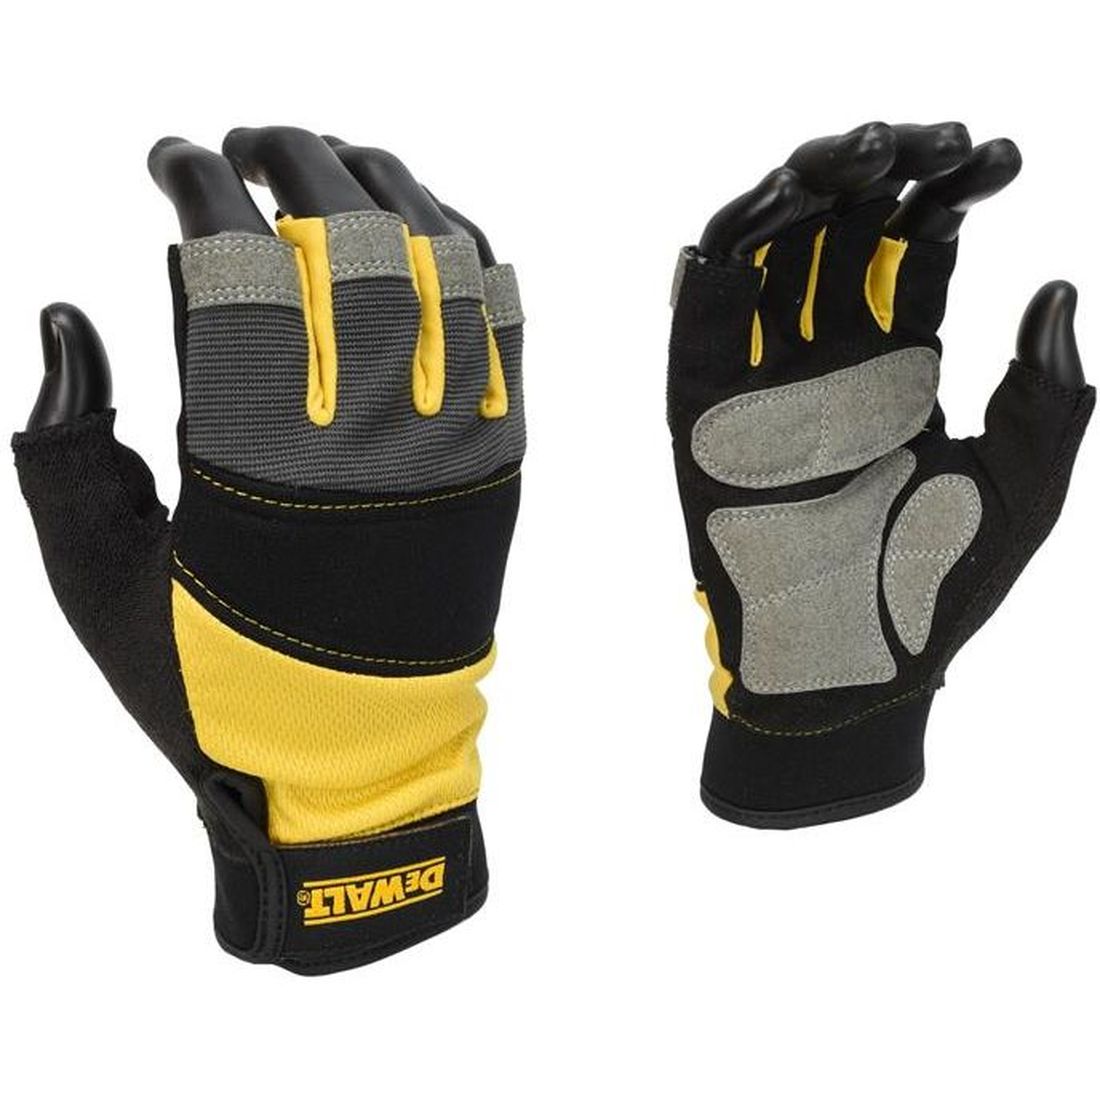 DEWALT Fingerless Performance Gloves - Large                                           